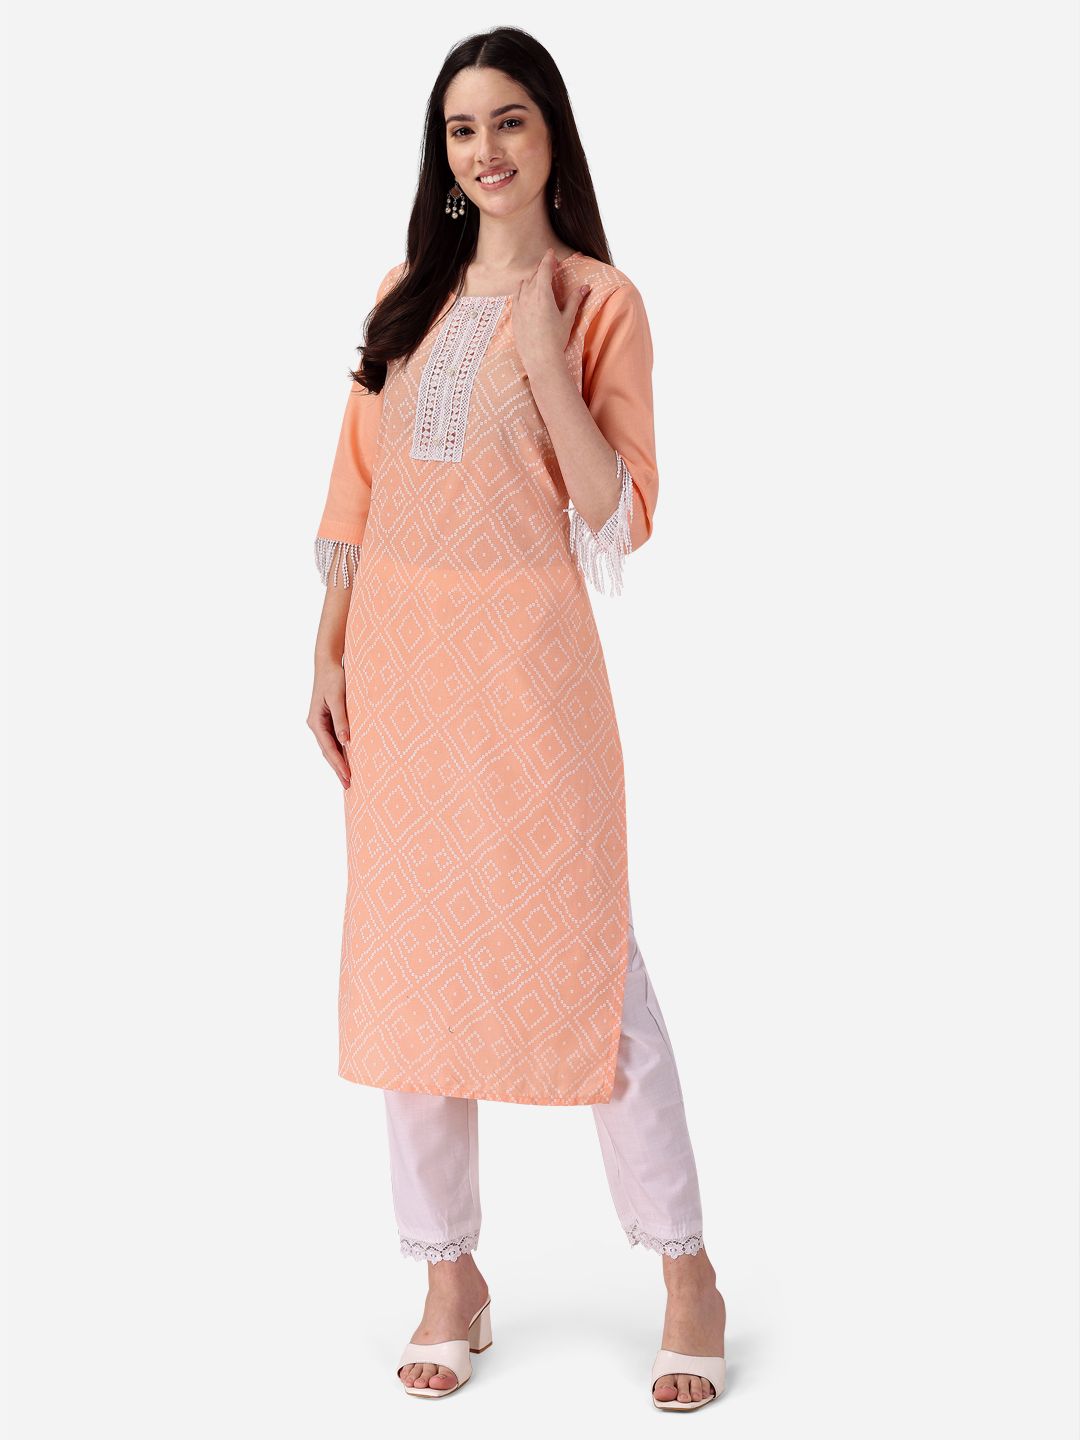 Deepkalaa Seamore Cotton Patch Lace Kurti Pant Set